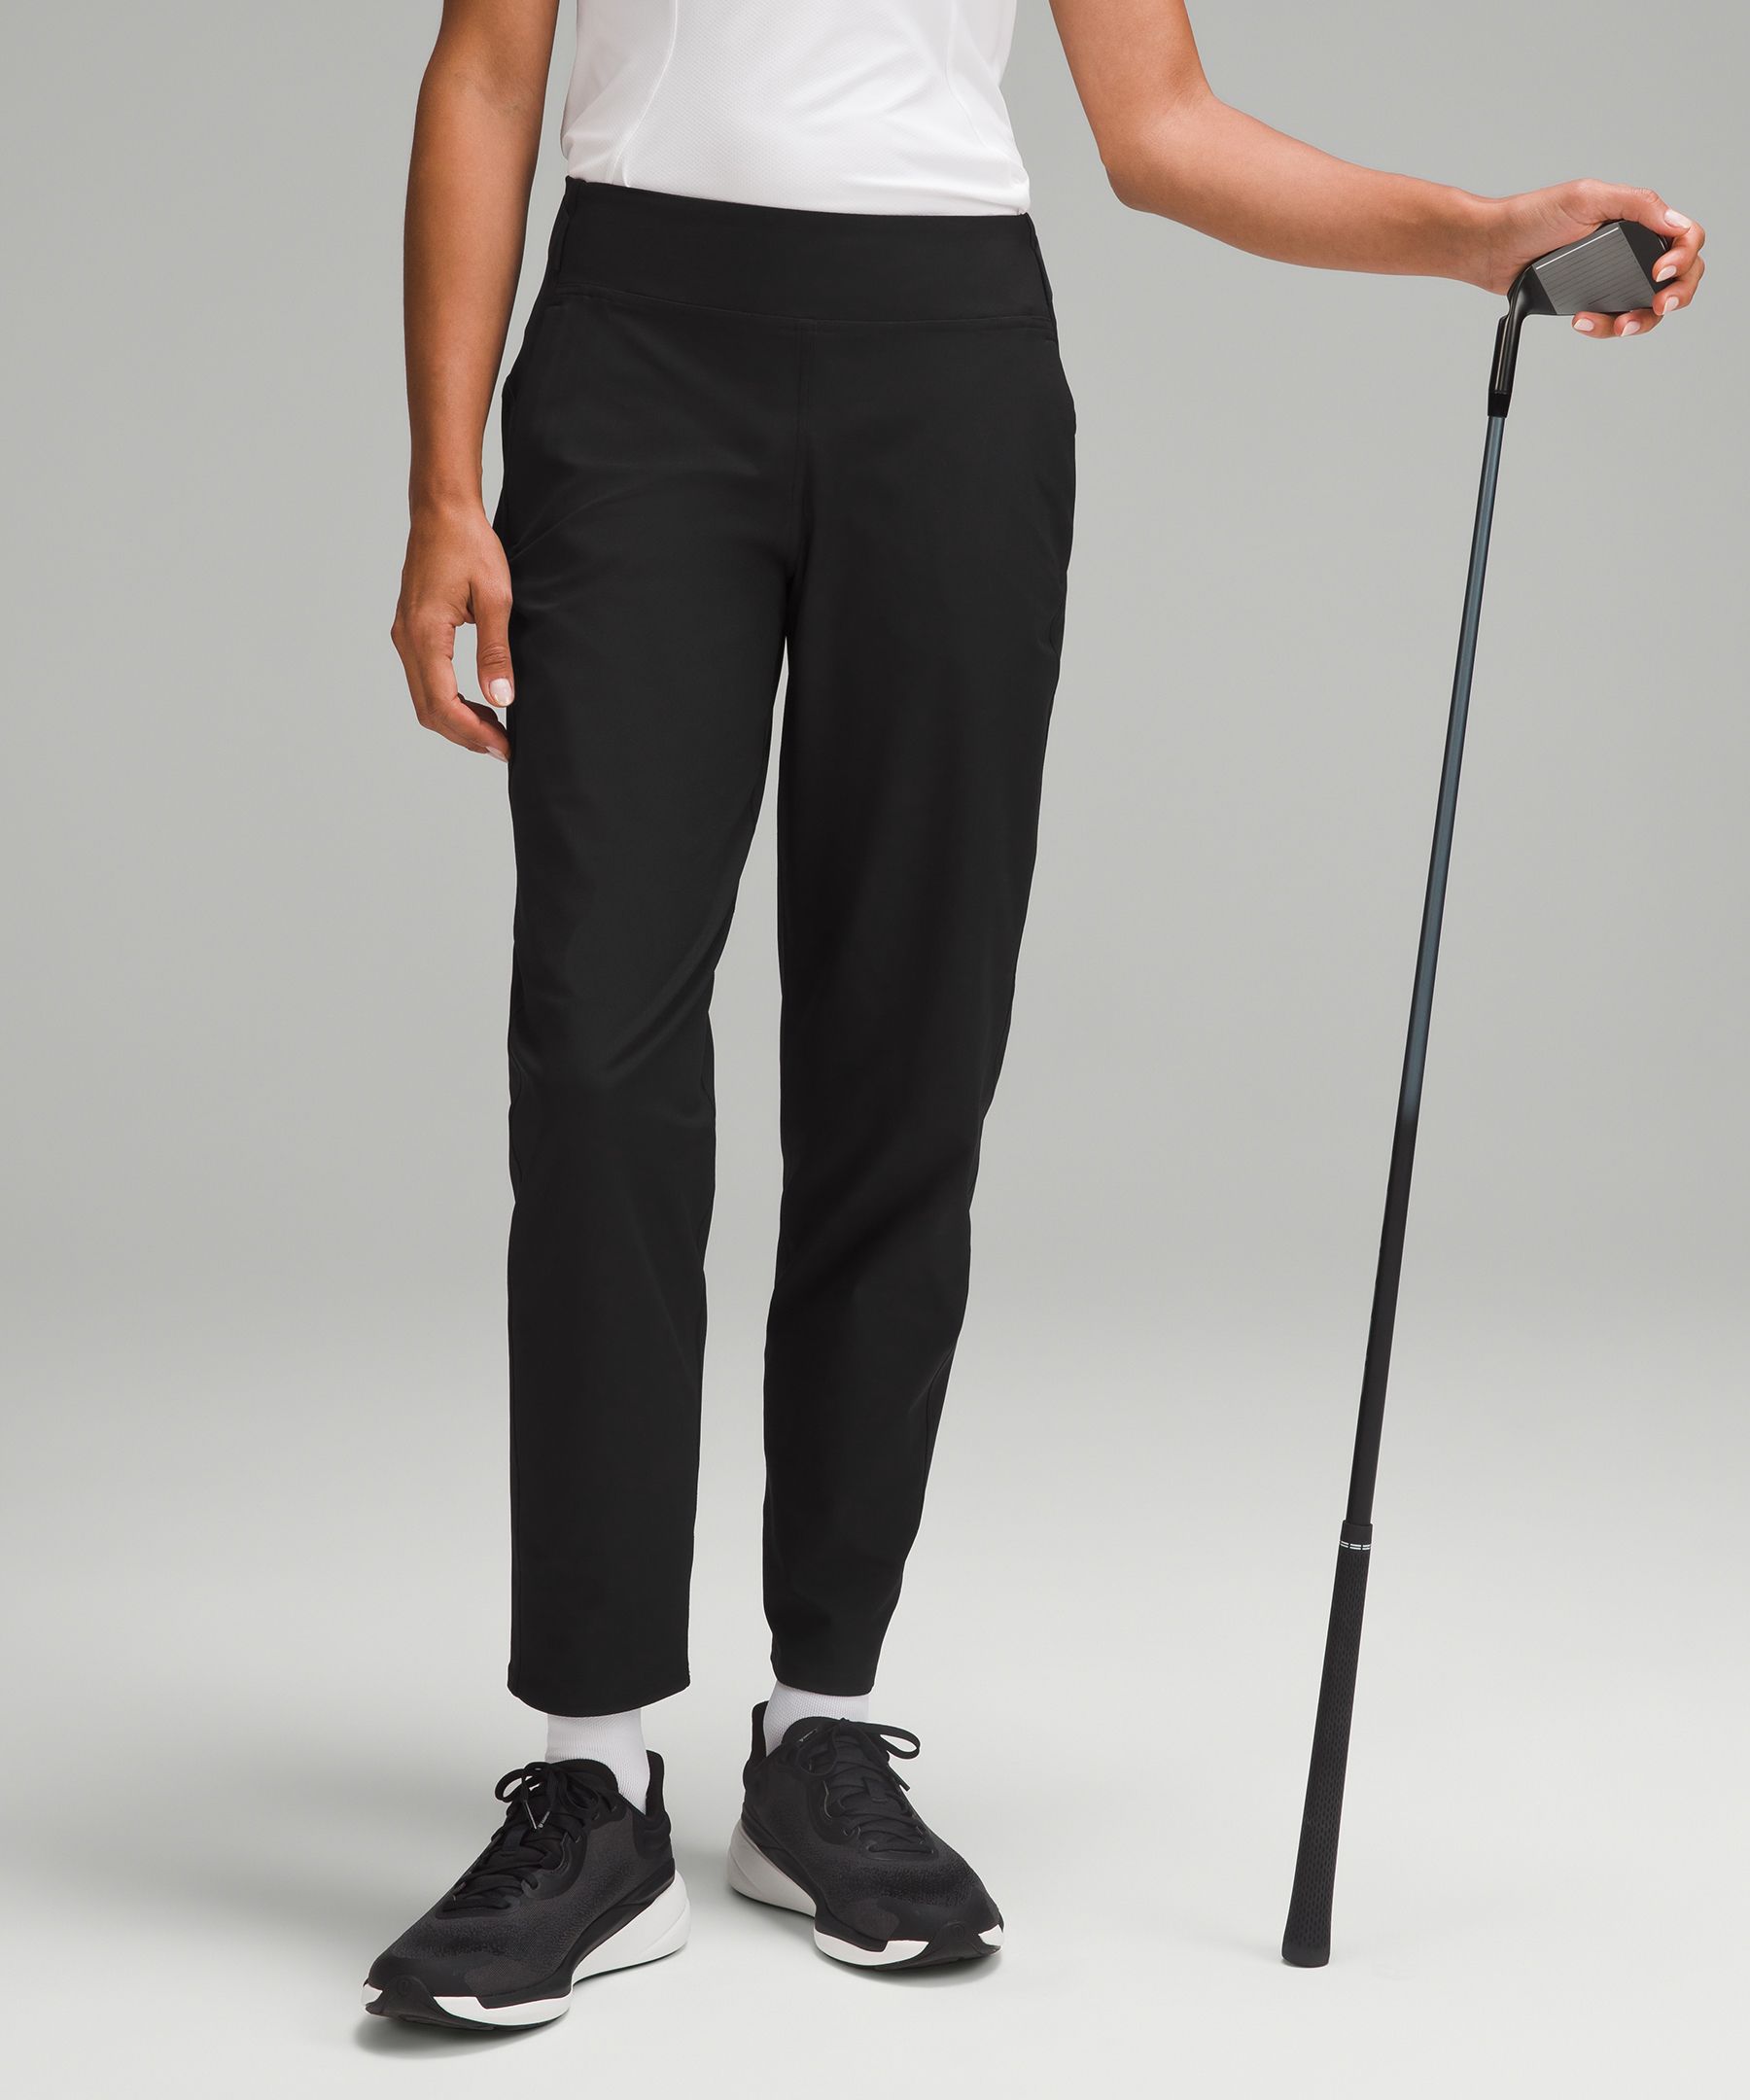 Lululemon athletica Warpstreme Multi-Pocket Mid-Rise Golf Pant 28, Women's Pants